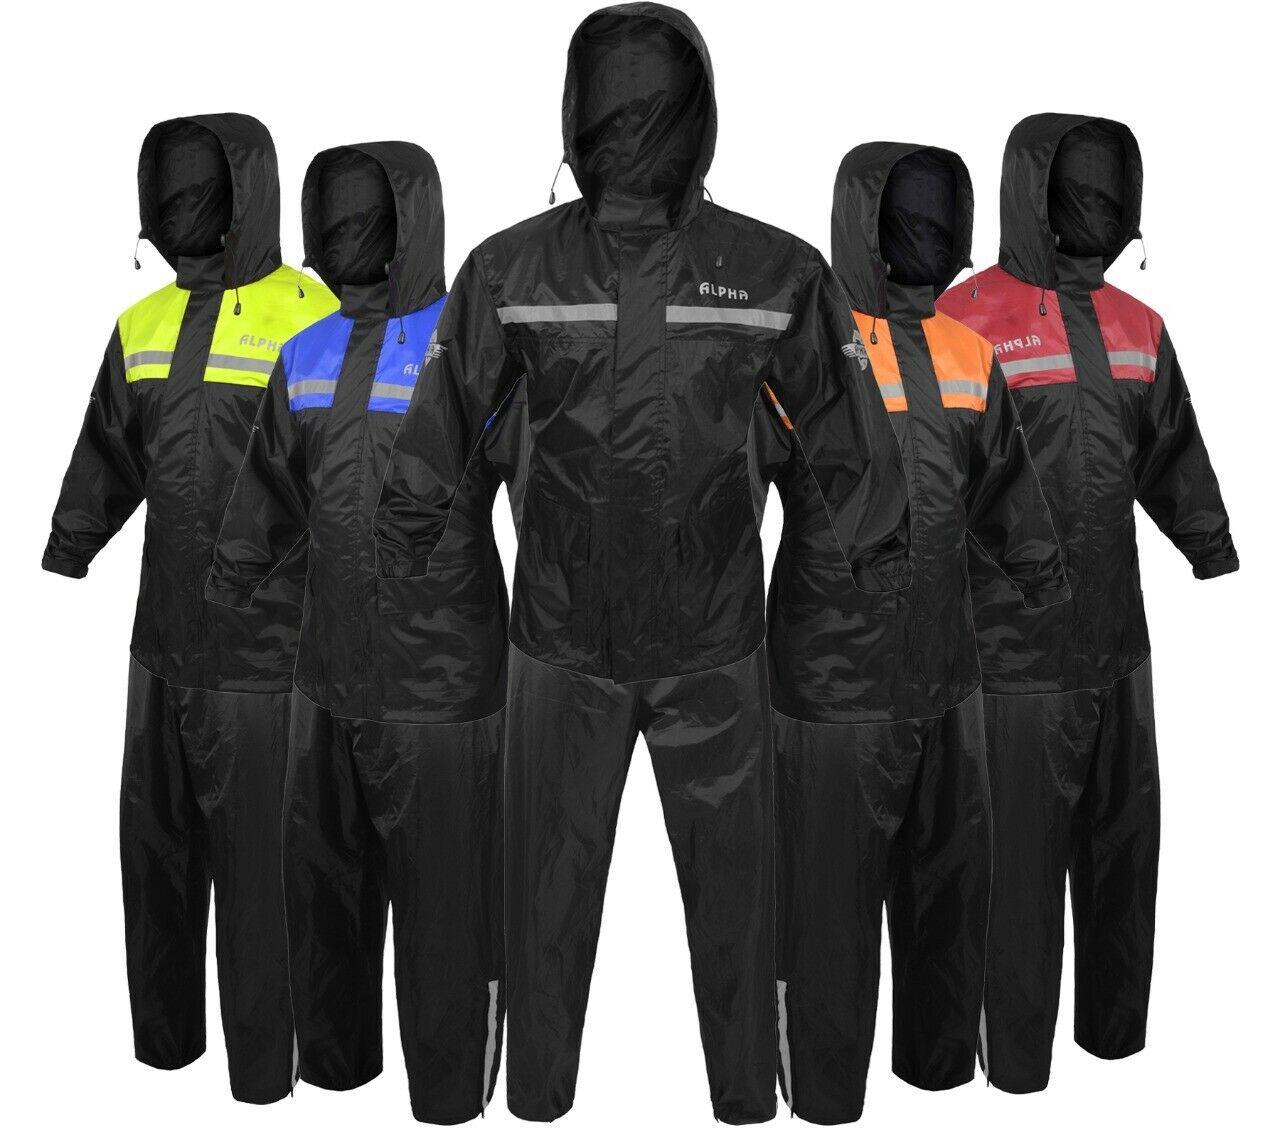 Rain Suit for Men Women Jackets Pant Gear Reflective Waterproof motorcycle hivis - Moto Life Products